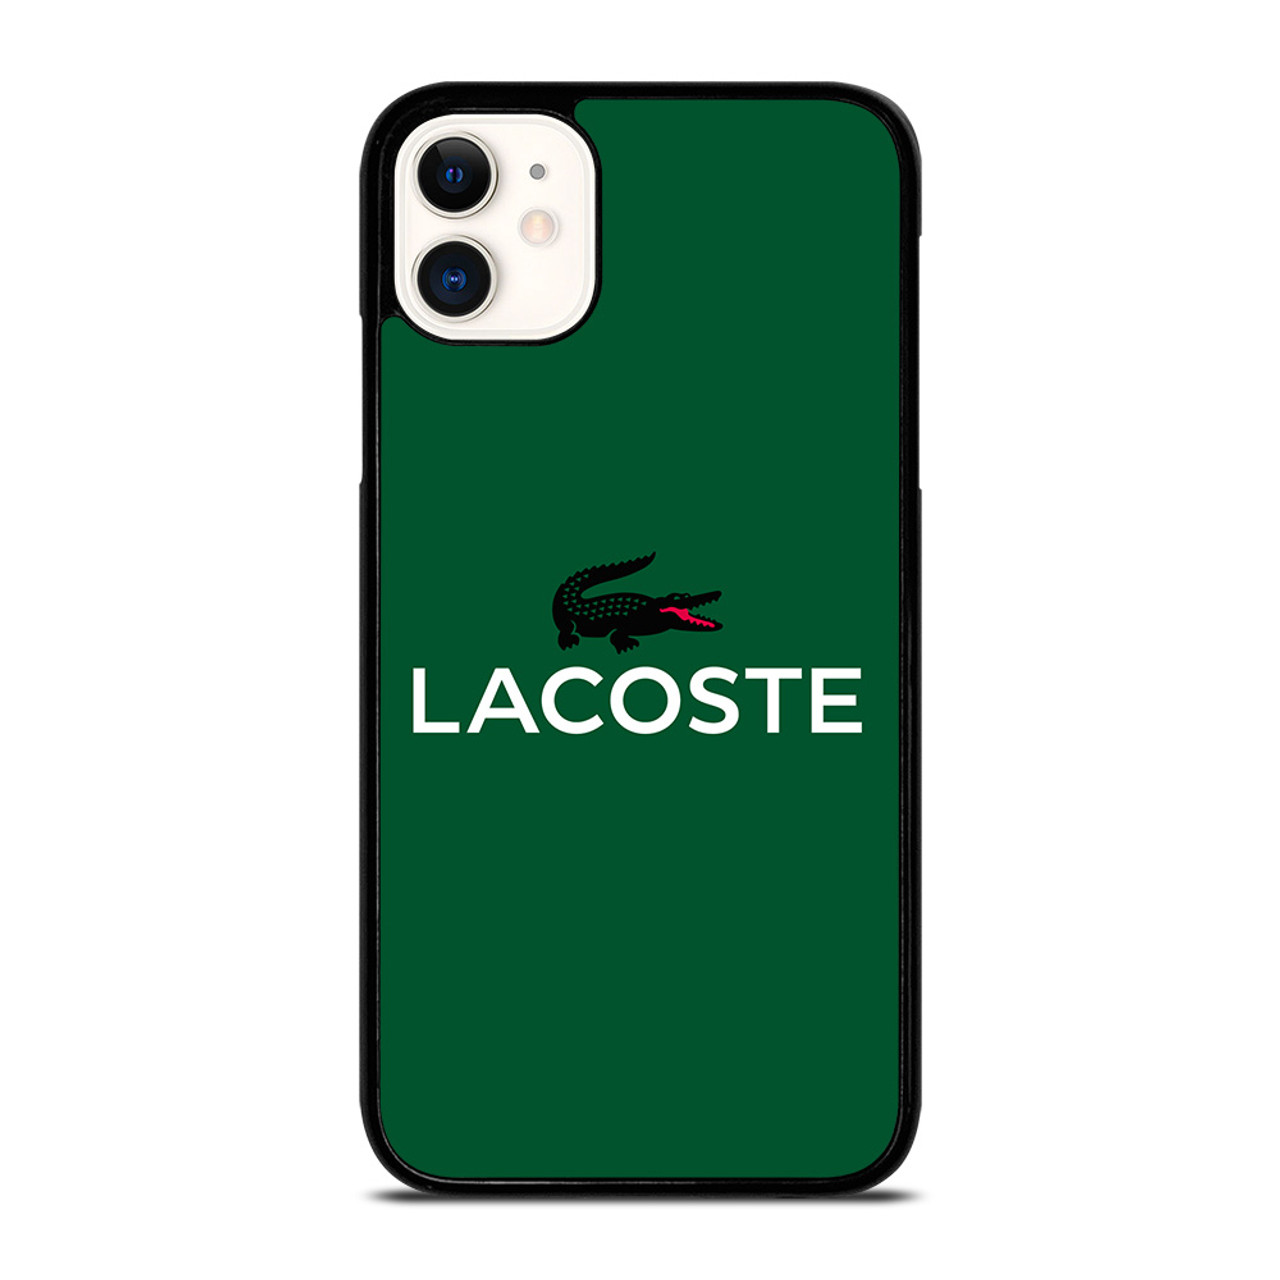 LACOSTE LOGO iPhone 11 Case